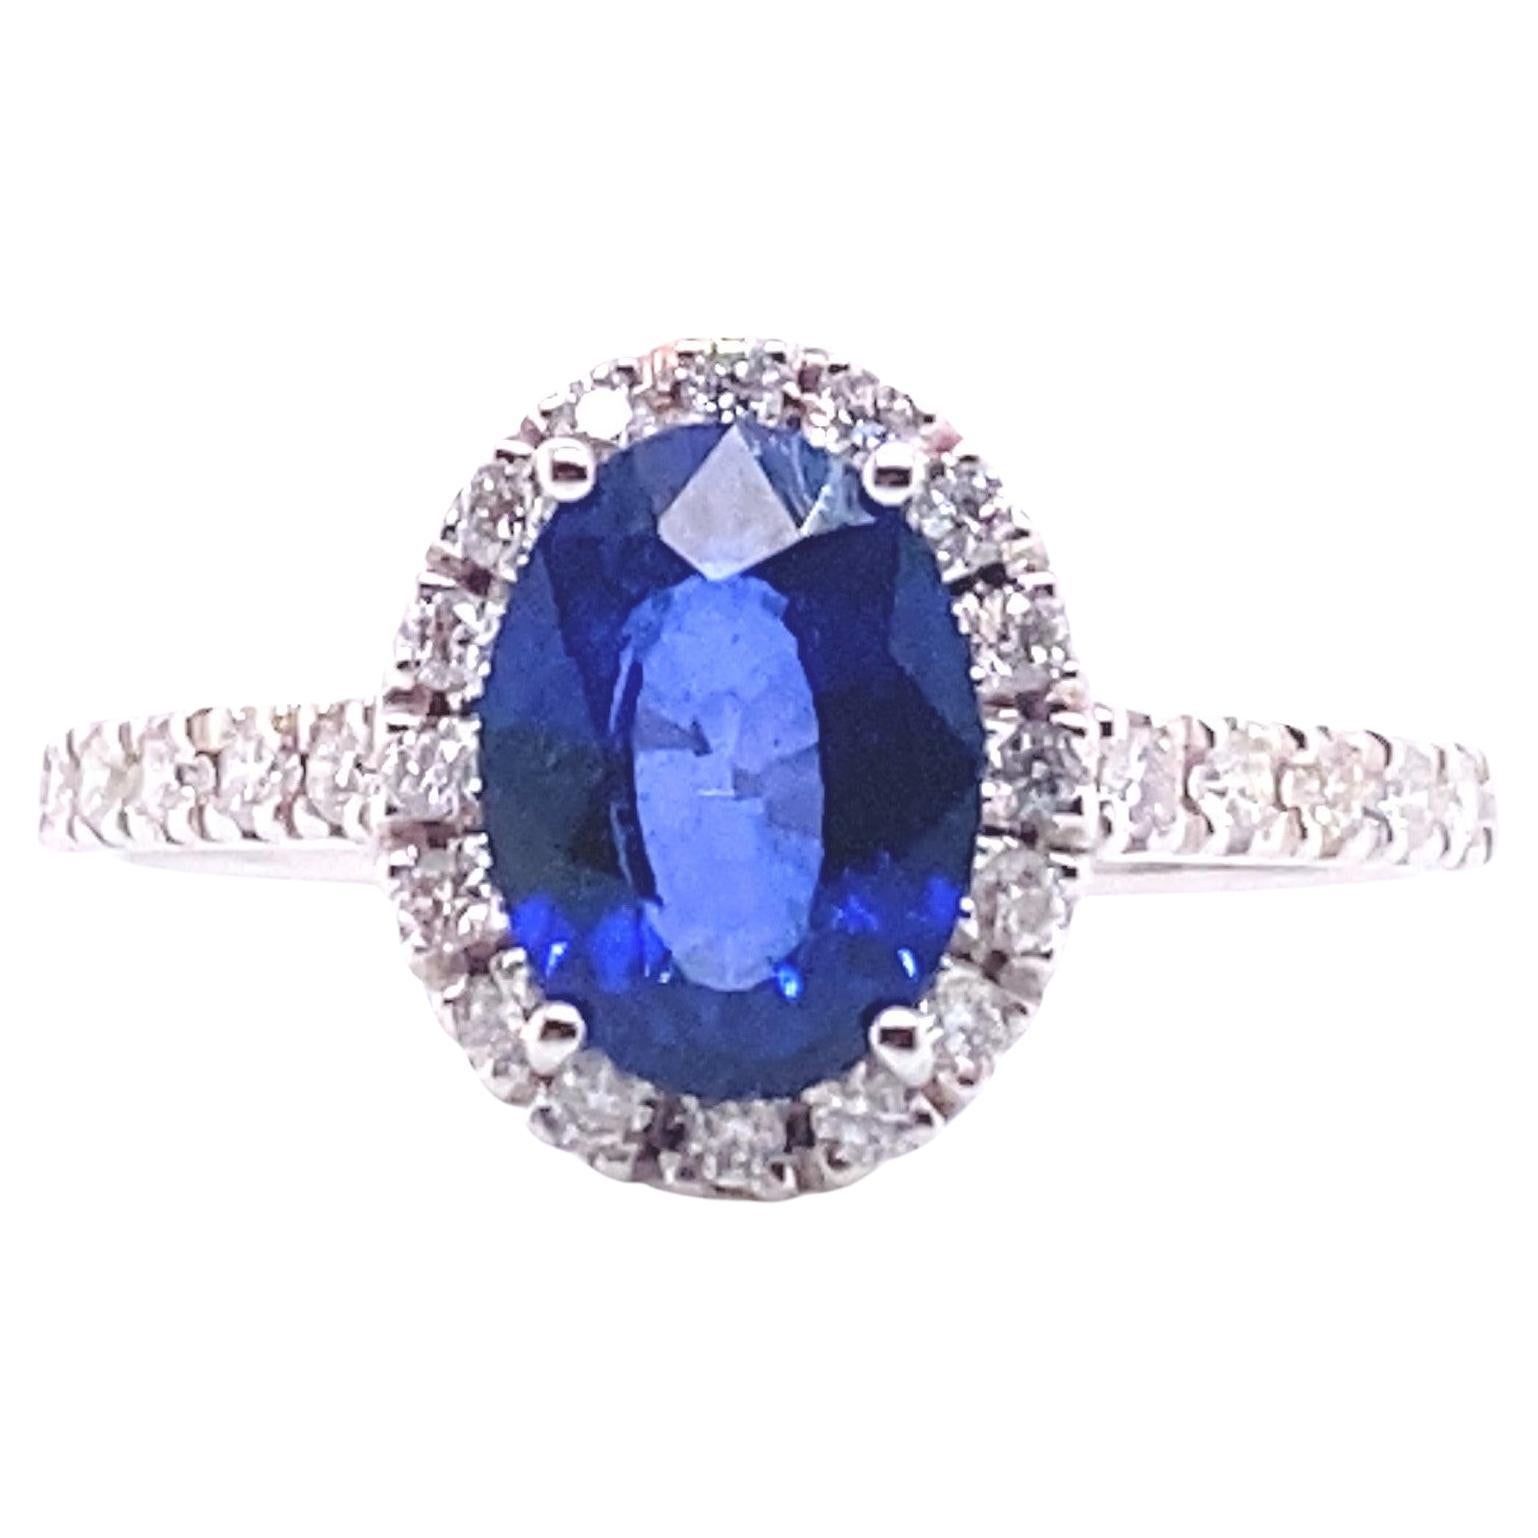 21st Century 18-Karat White Gold 1.51-Carat Blue Sapphire Diamond Cocktail Ring